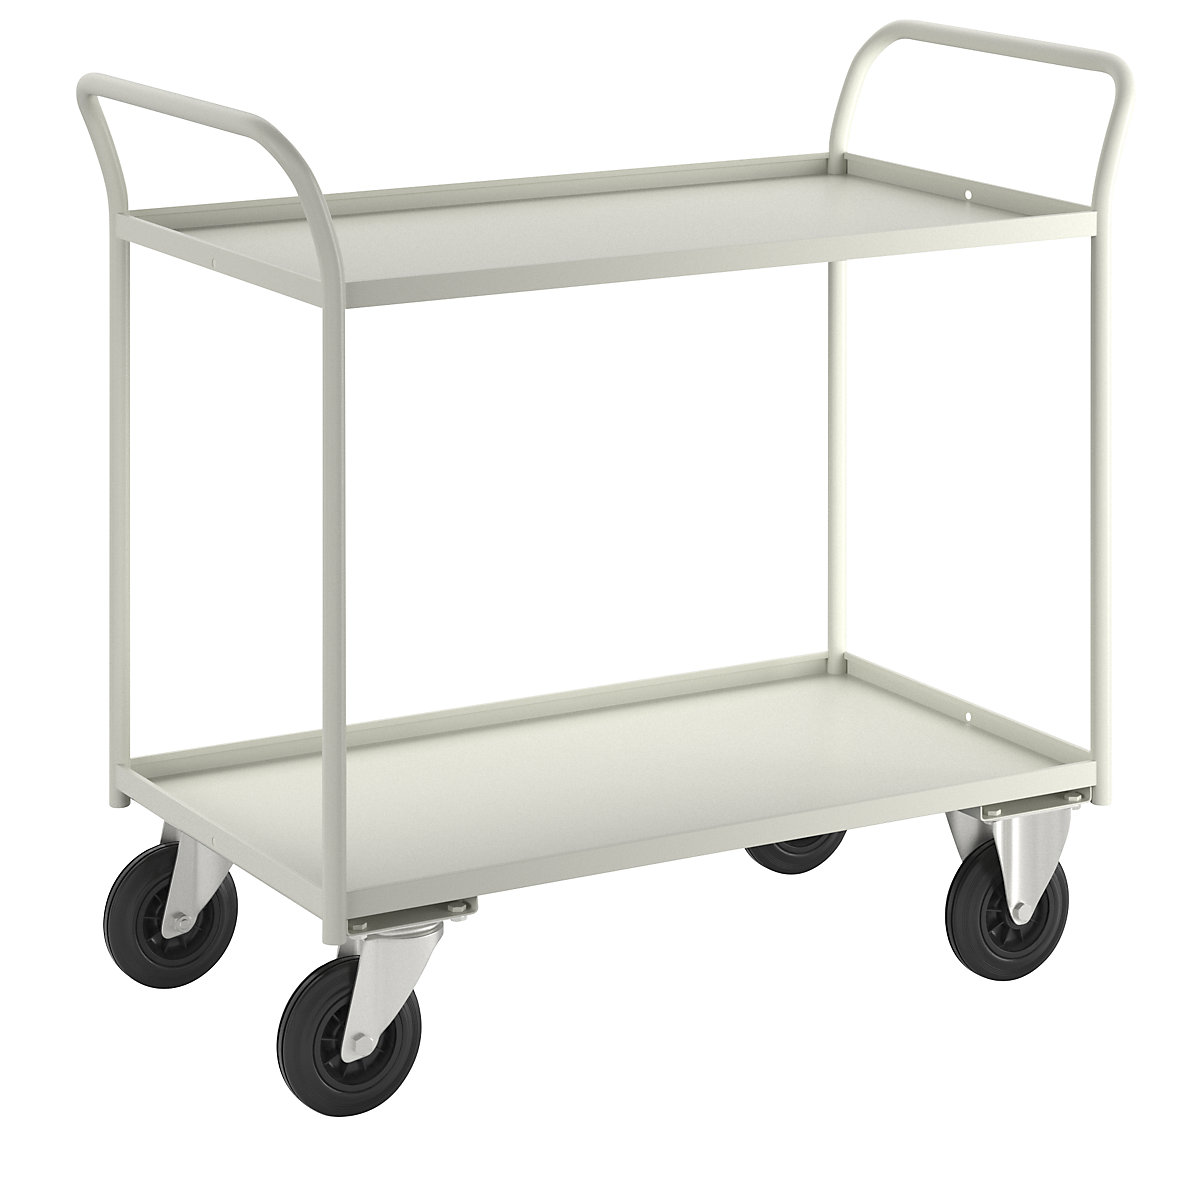 KM41 table trolley – Kongamek, 2 shelves with raised edges, LxWxH 1070 x 550 x 1000 mm, white, 2 swivel castors and 2 fixed castors-1